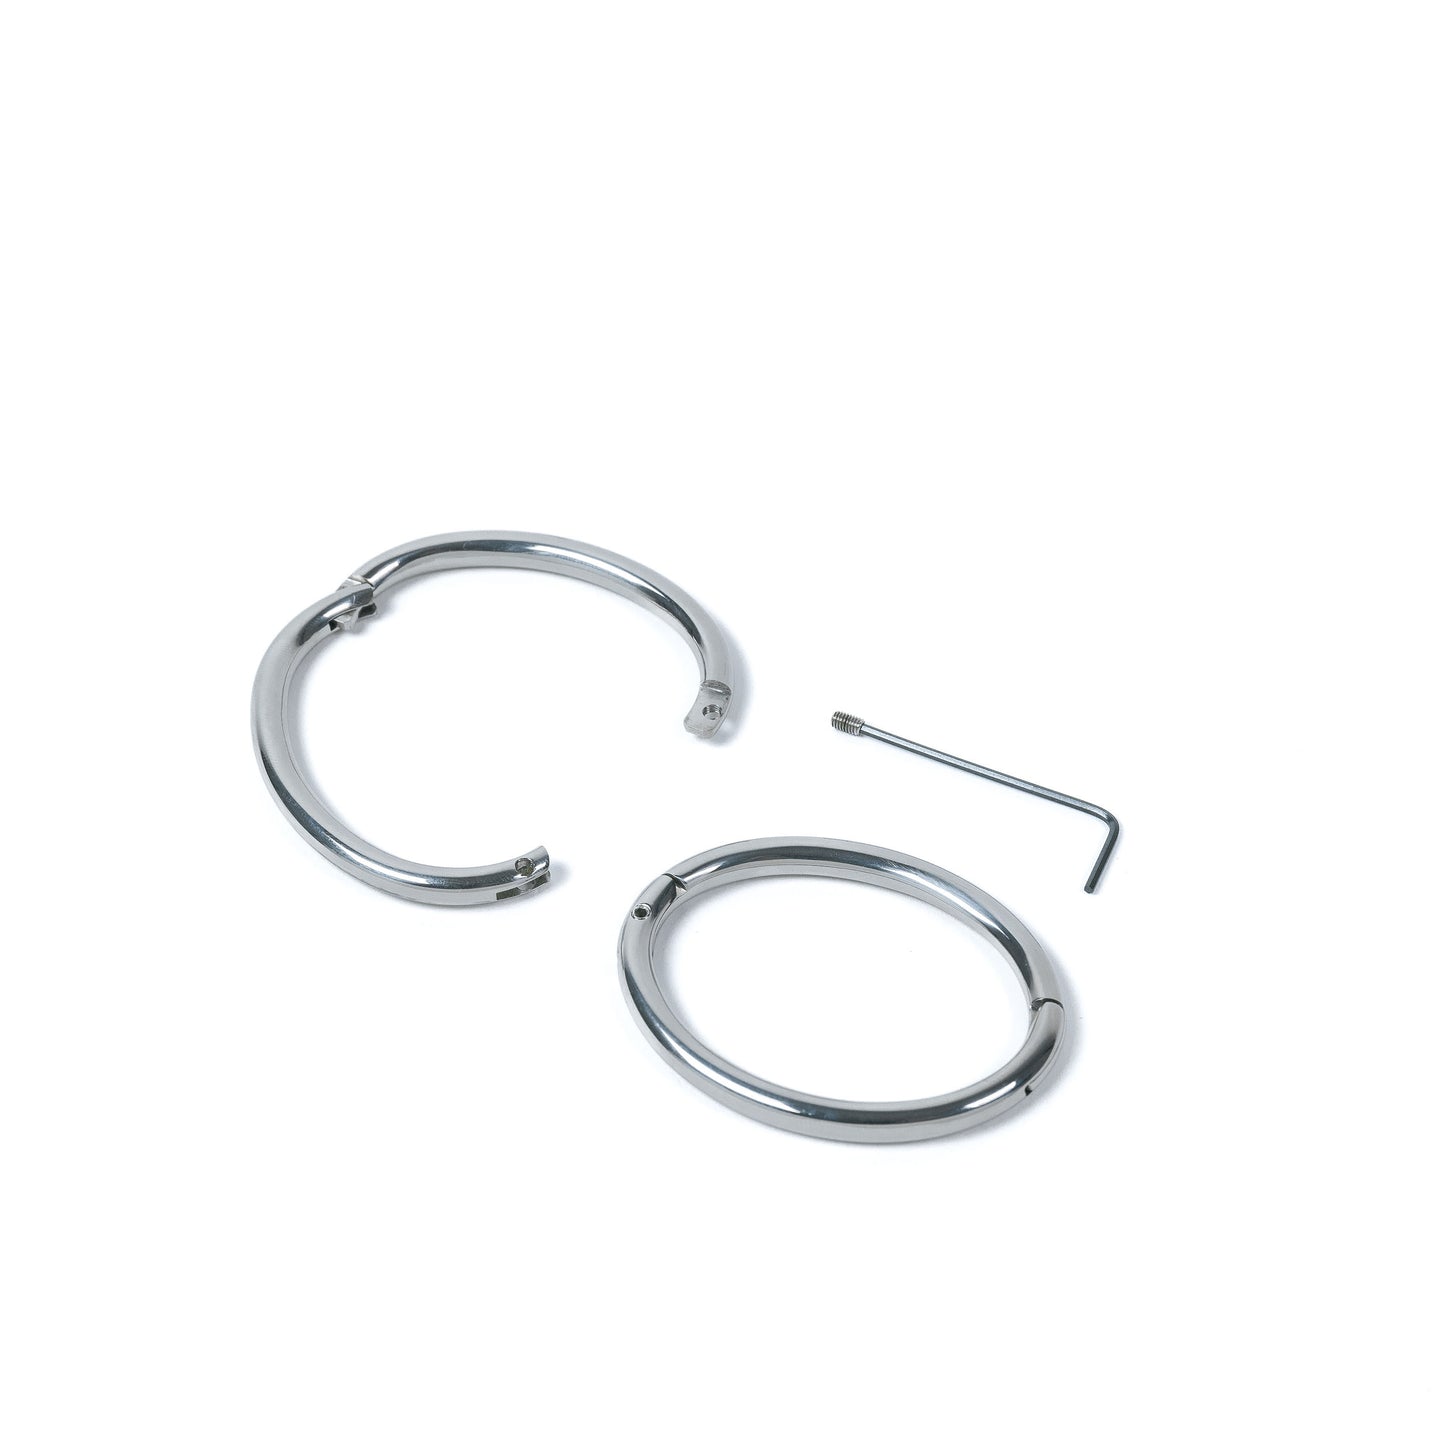 Thin locking jewelry bangles with key